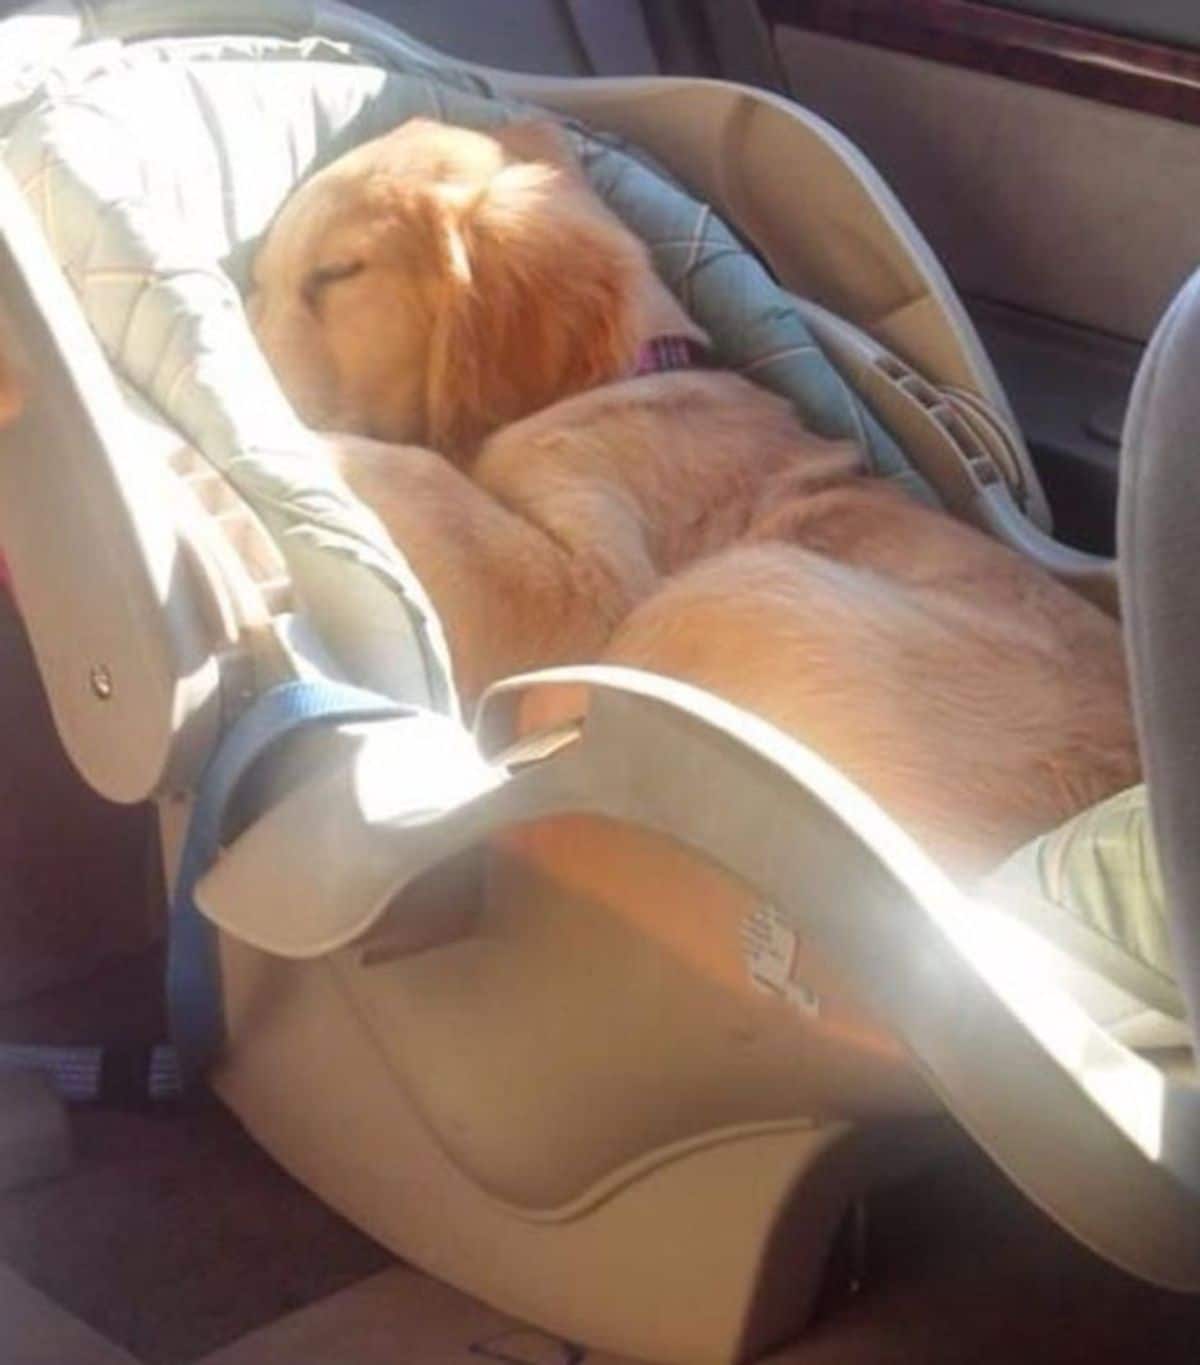 golden retriever puppy sleeping in a baby car seat